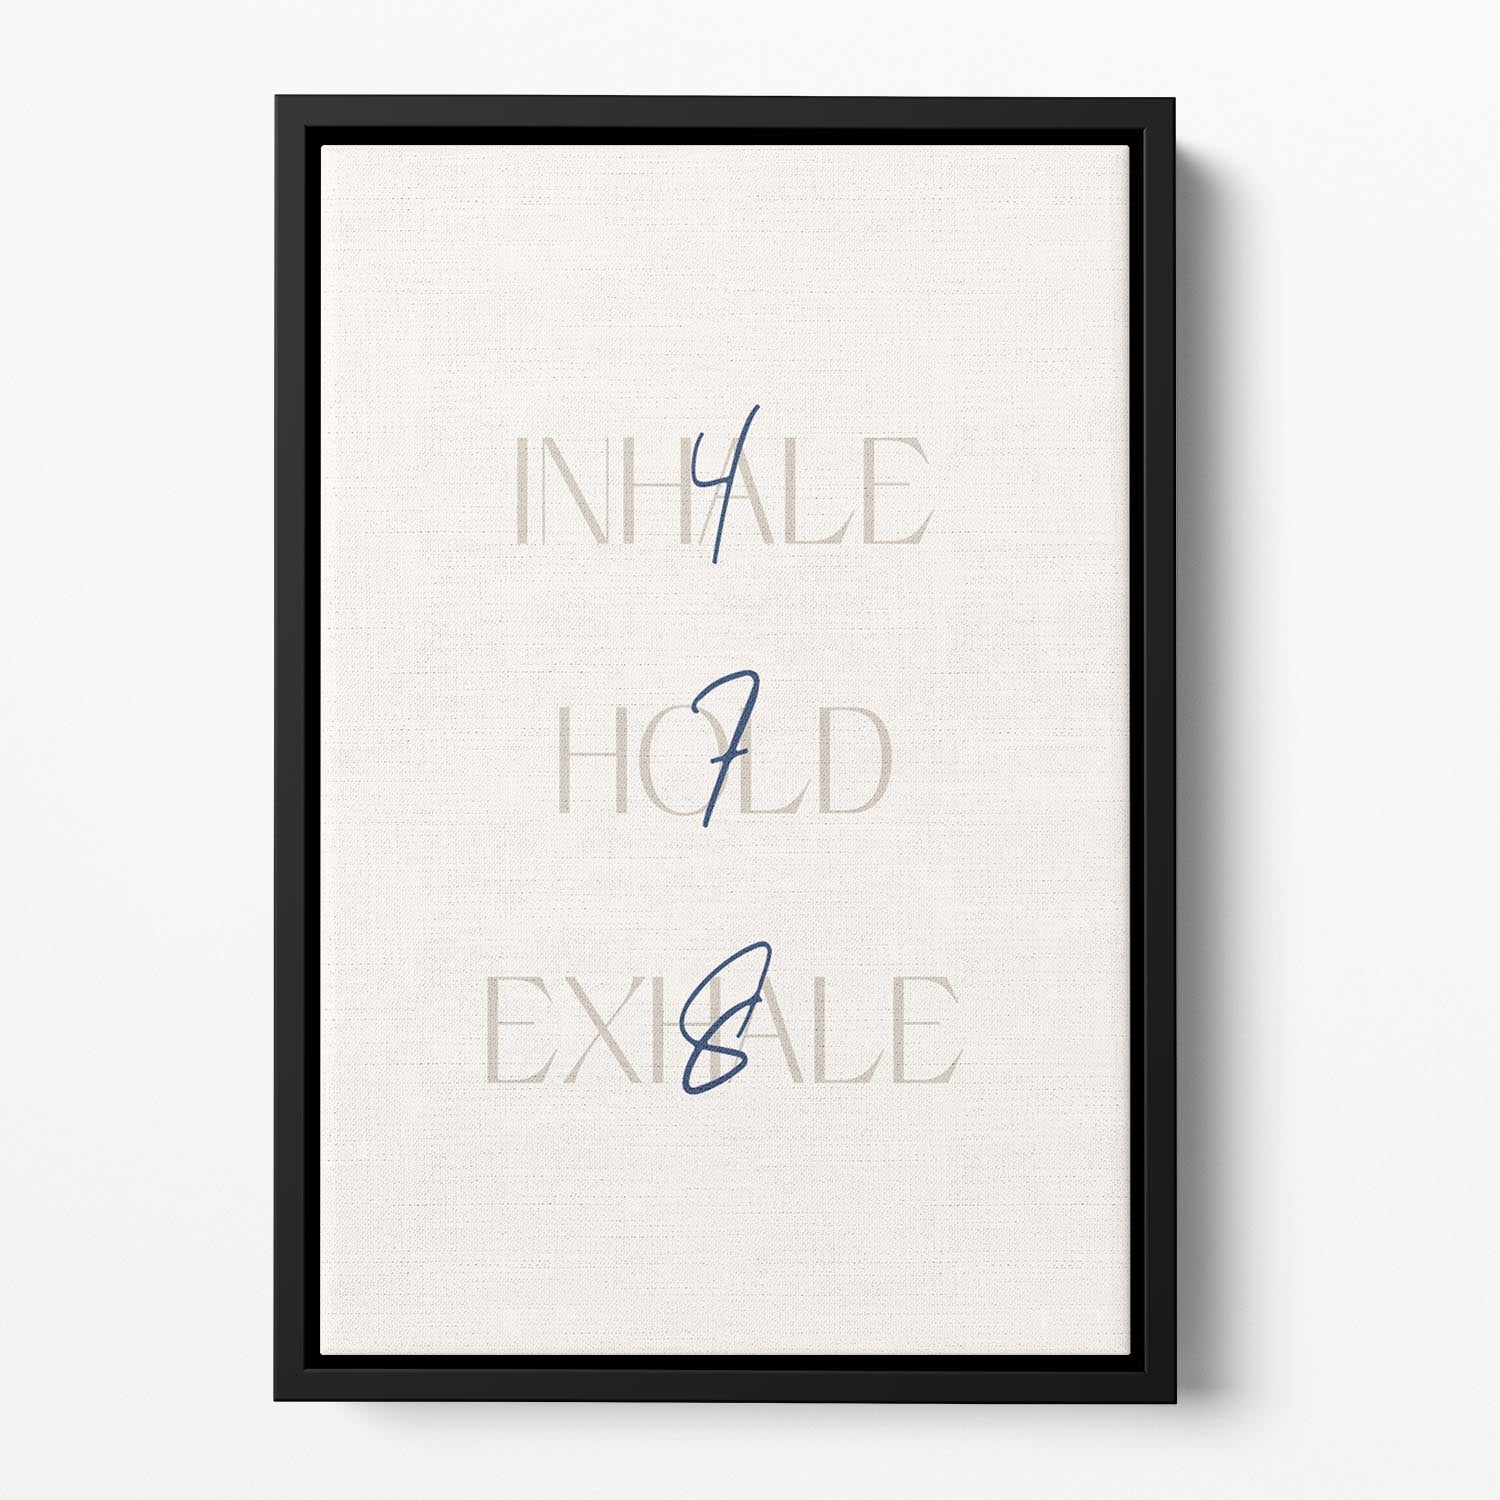 Inhale Hold Exhale Floating Framed Canvas - Canvas Art Rocks - 2